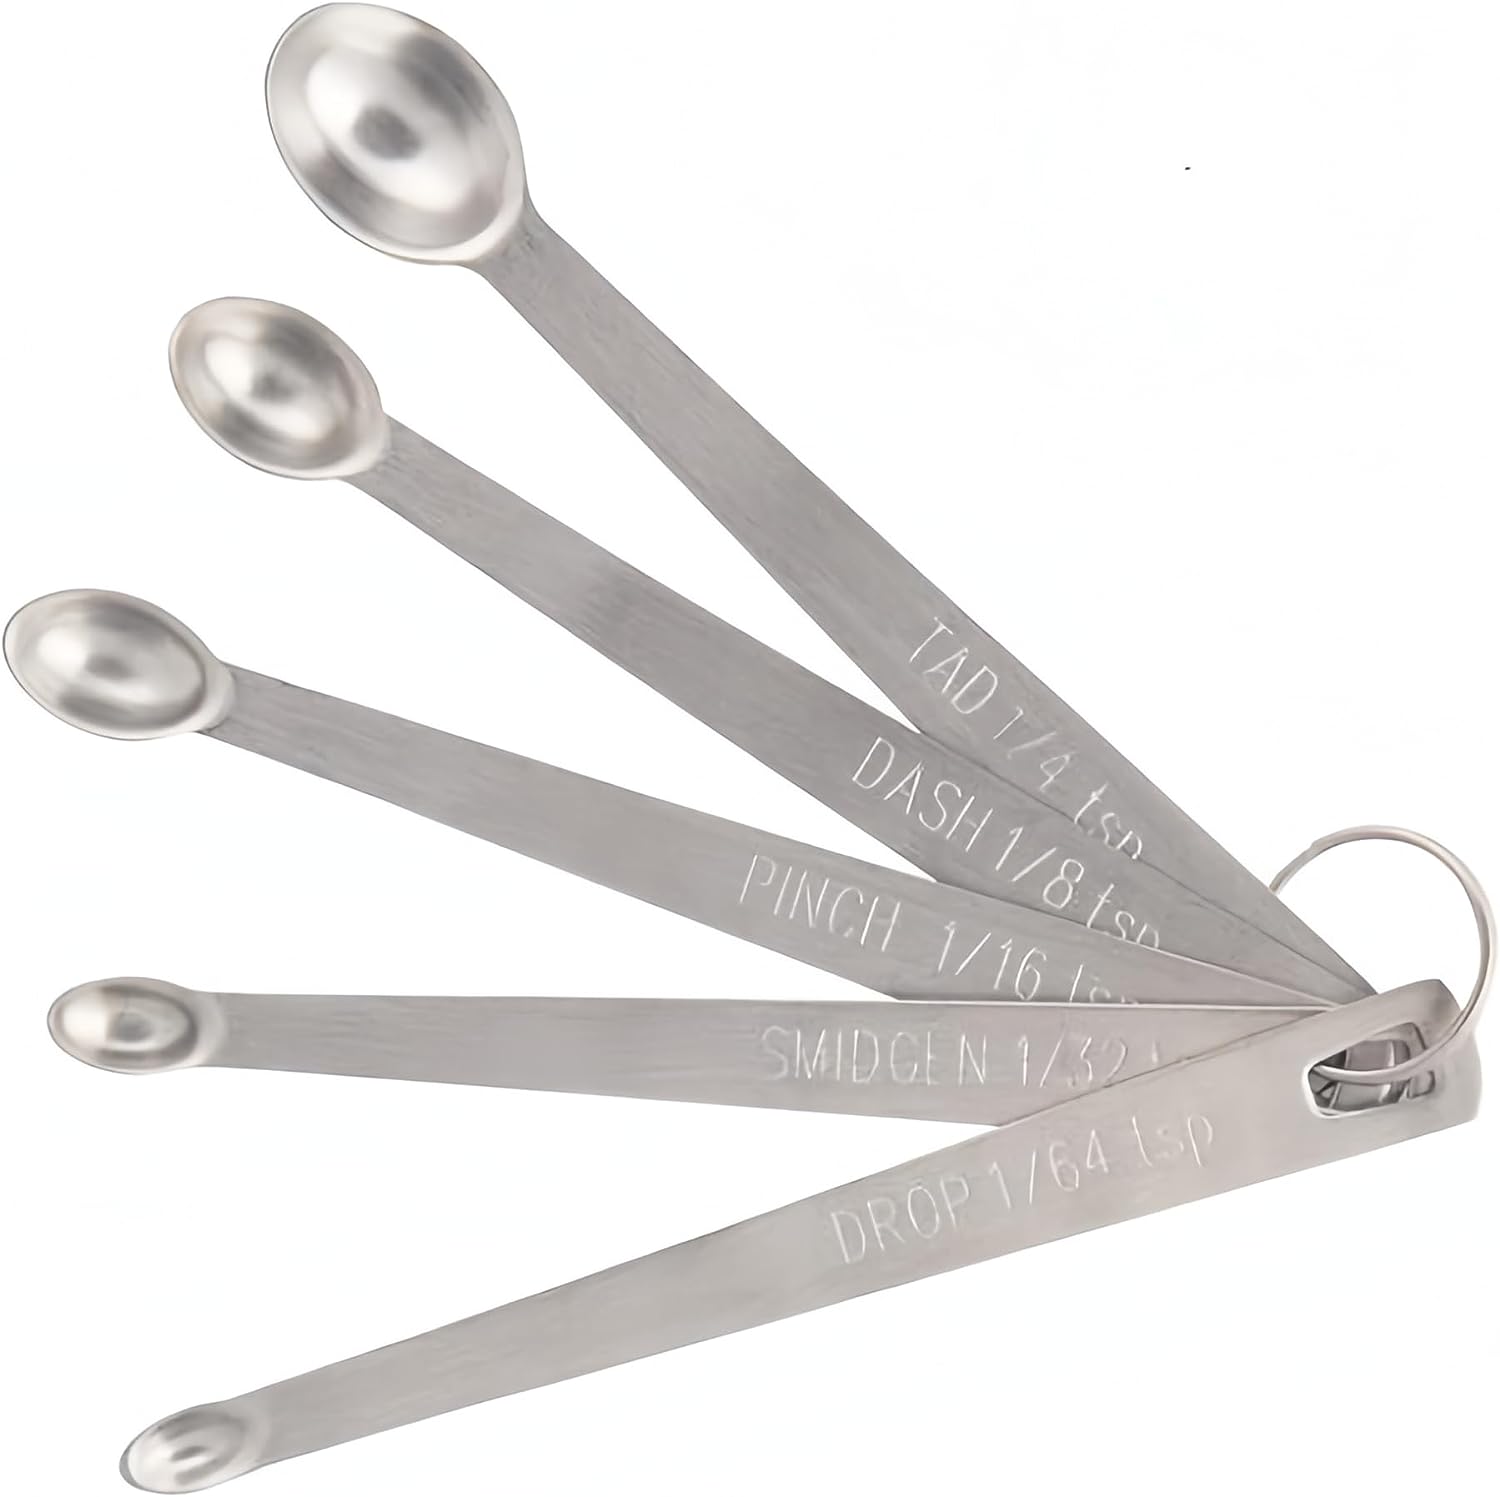 Zsirue 2 PCS Adjustable Measuring Spoon Set, Measuring Dry/Liquid